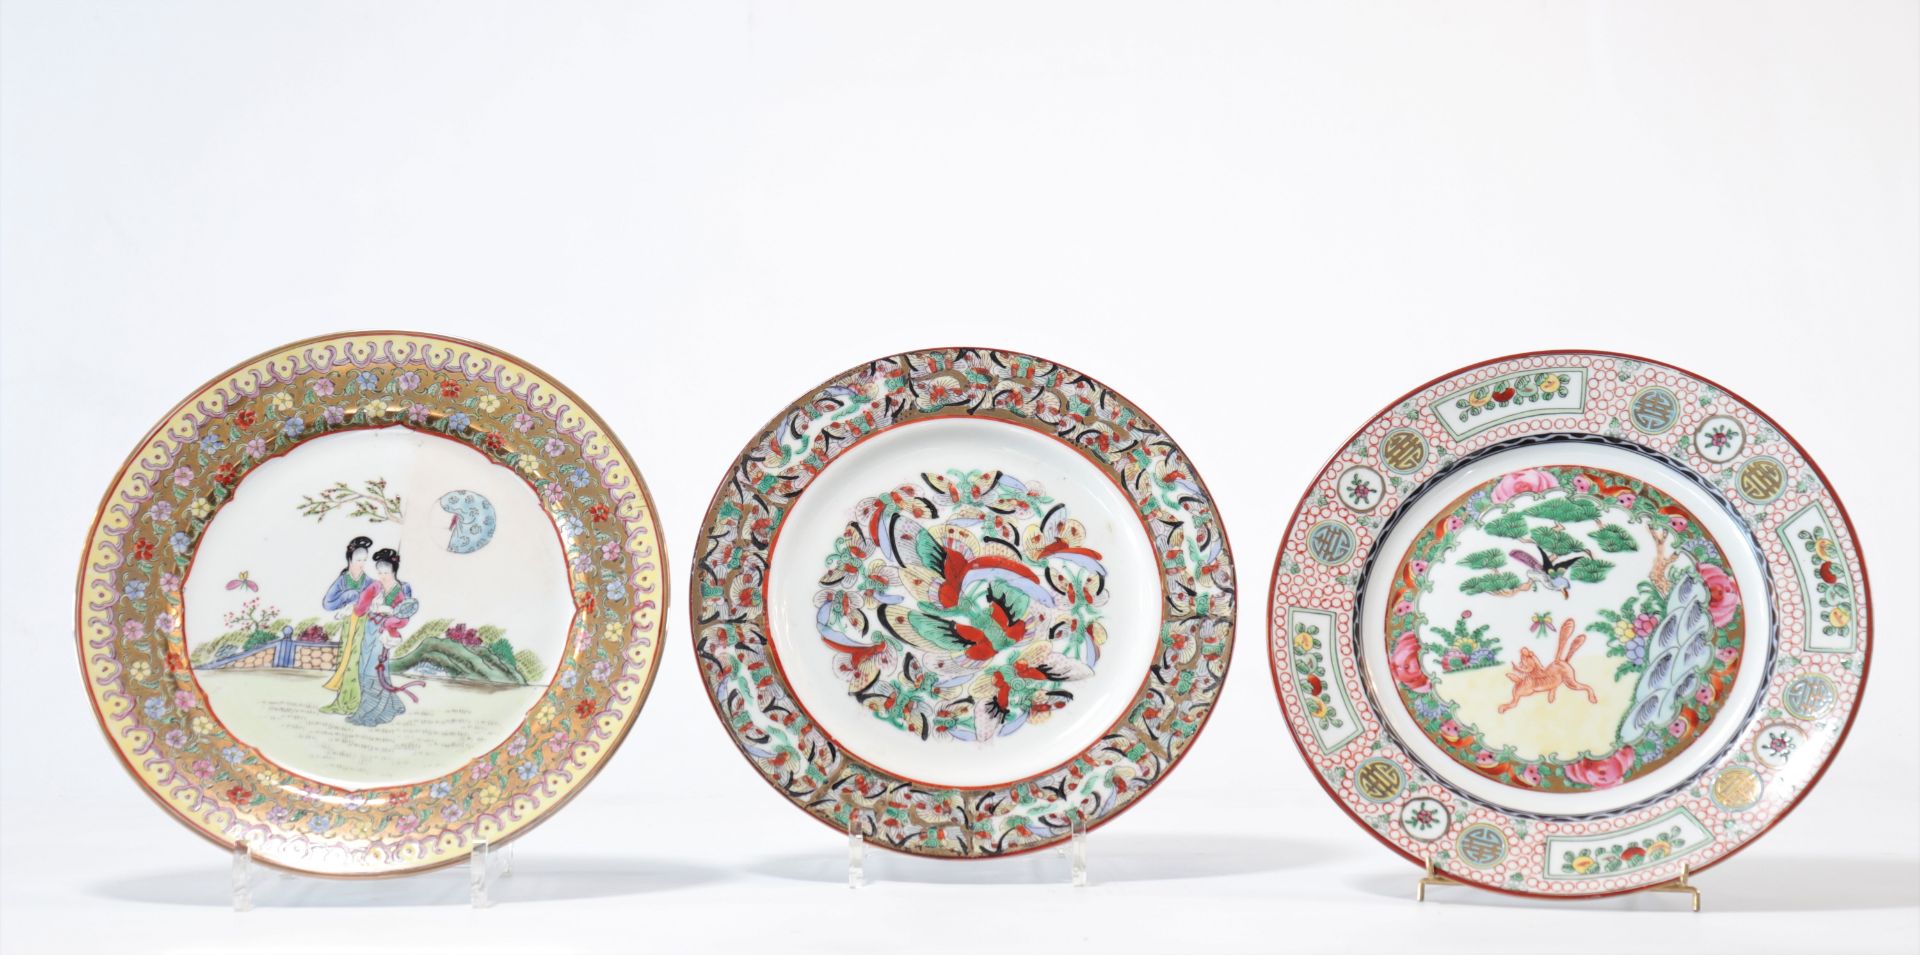 Set of 3 Chinese porcelain plates